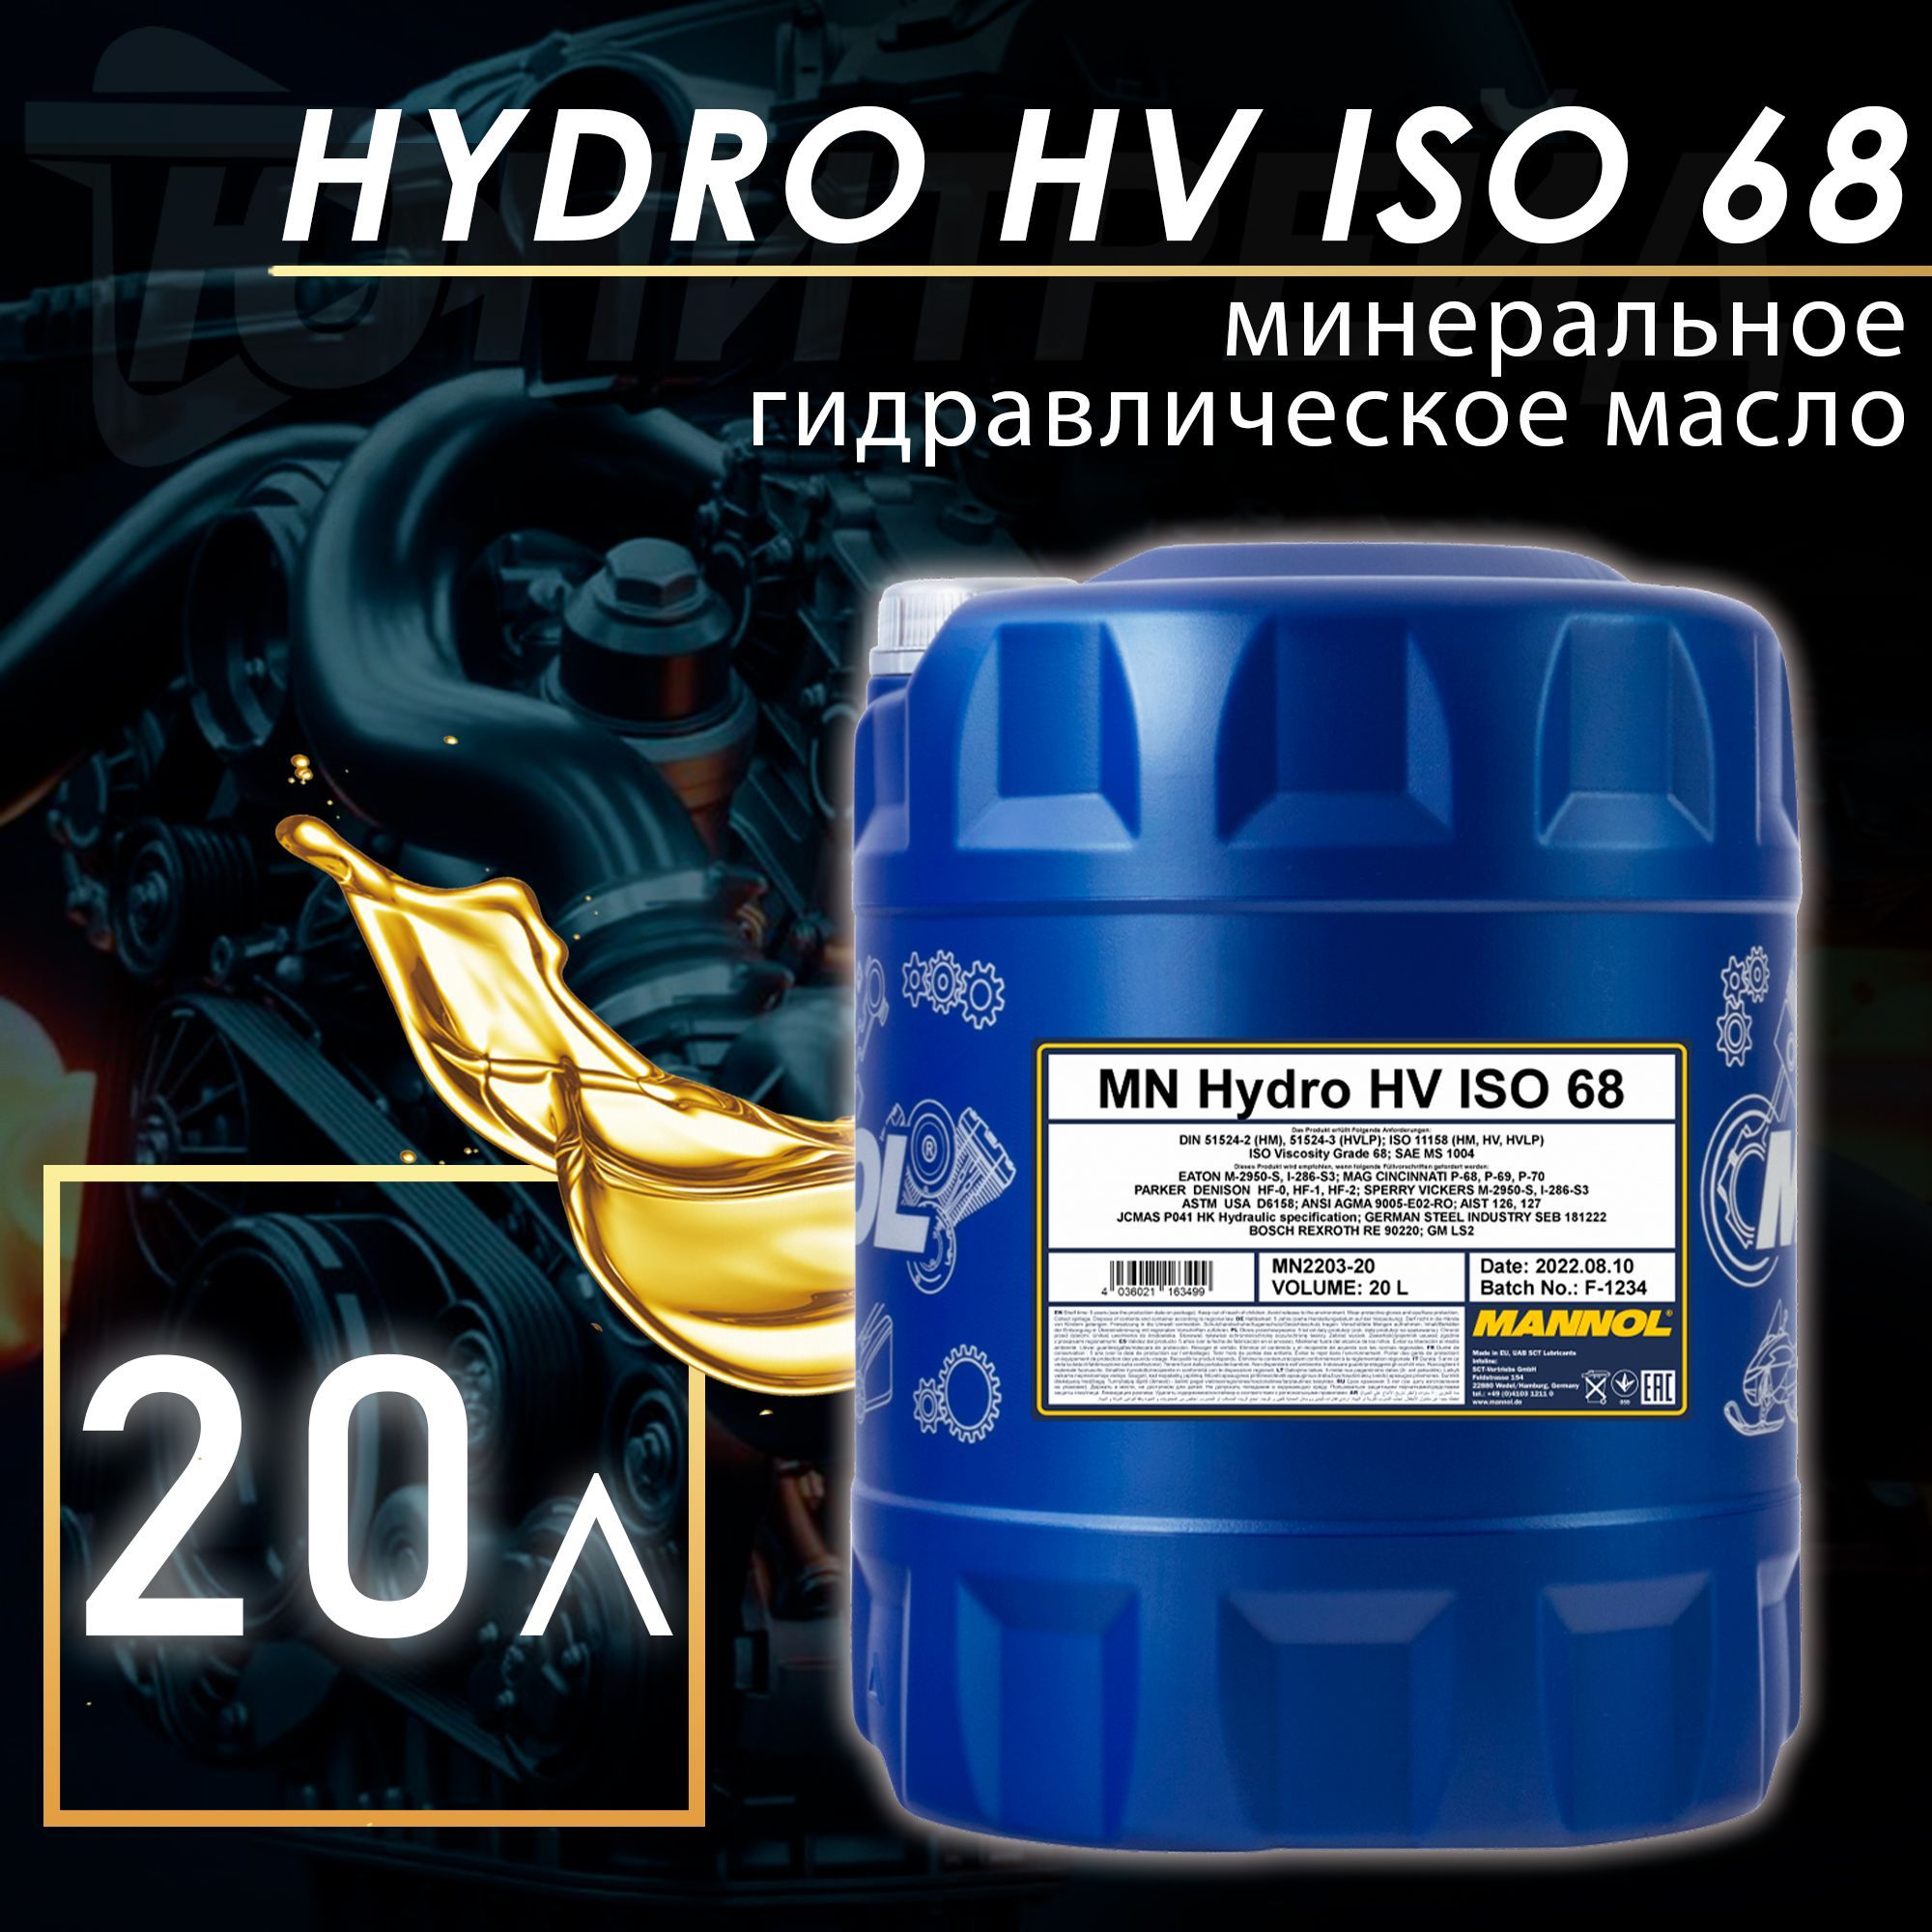 Hydros гидравлическое масло. Mannol ISO 68 индекс вязкости. HLD-din 51524 t2 ISO VG 22.